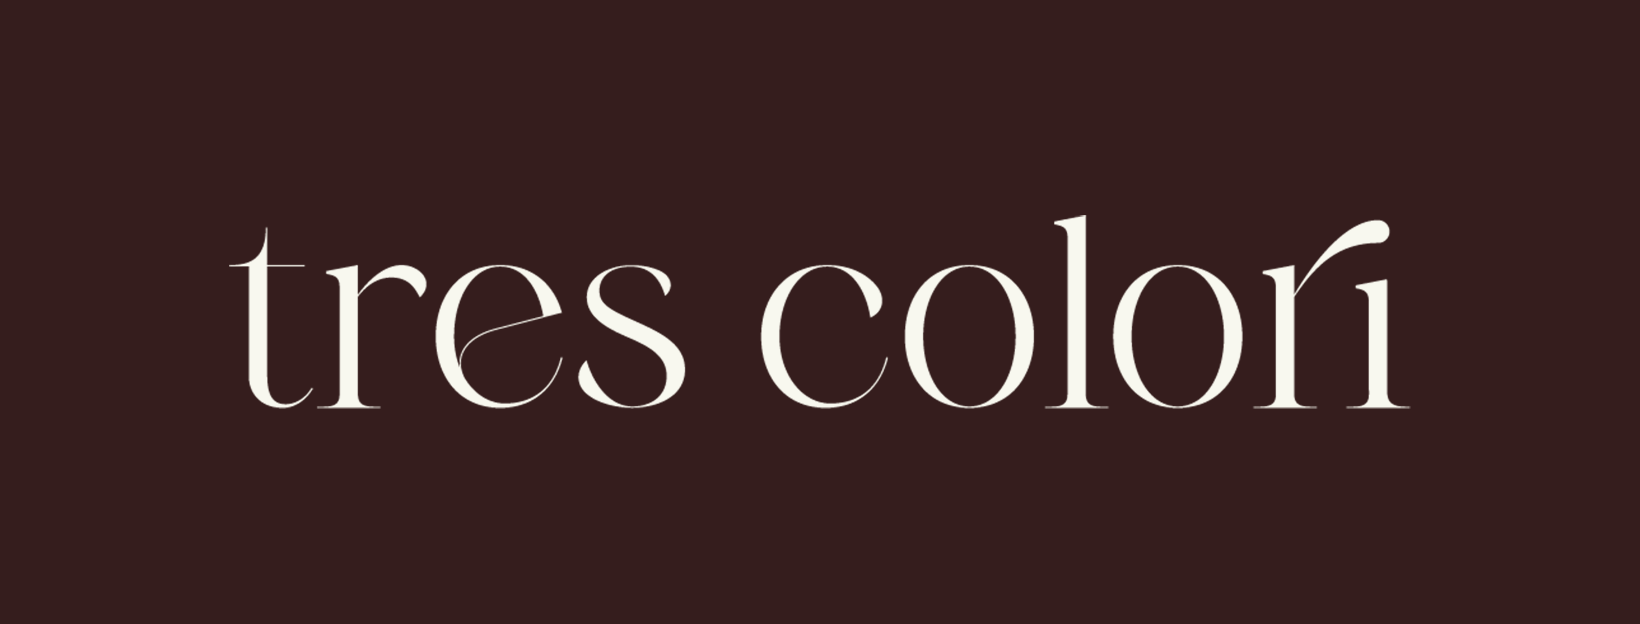 Tres Colori  logo